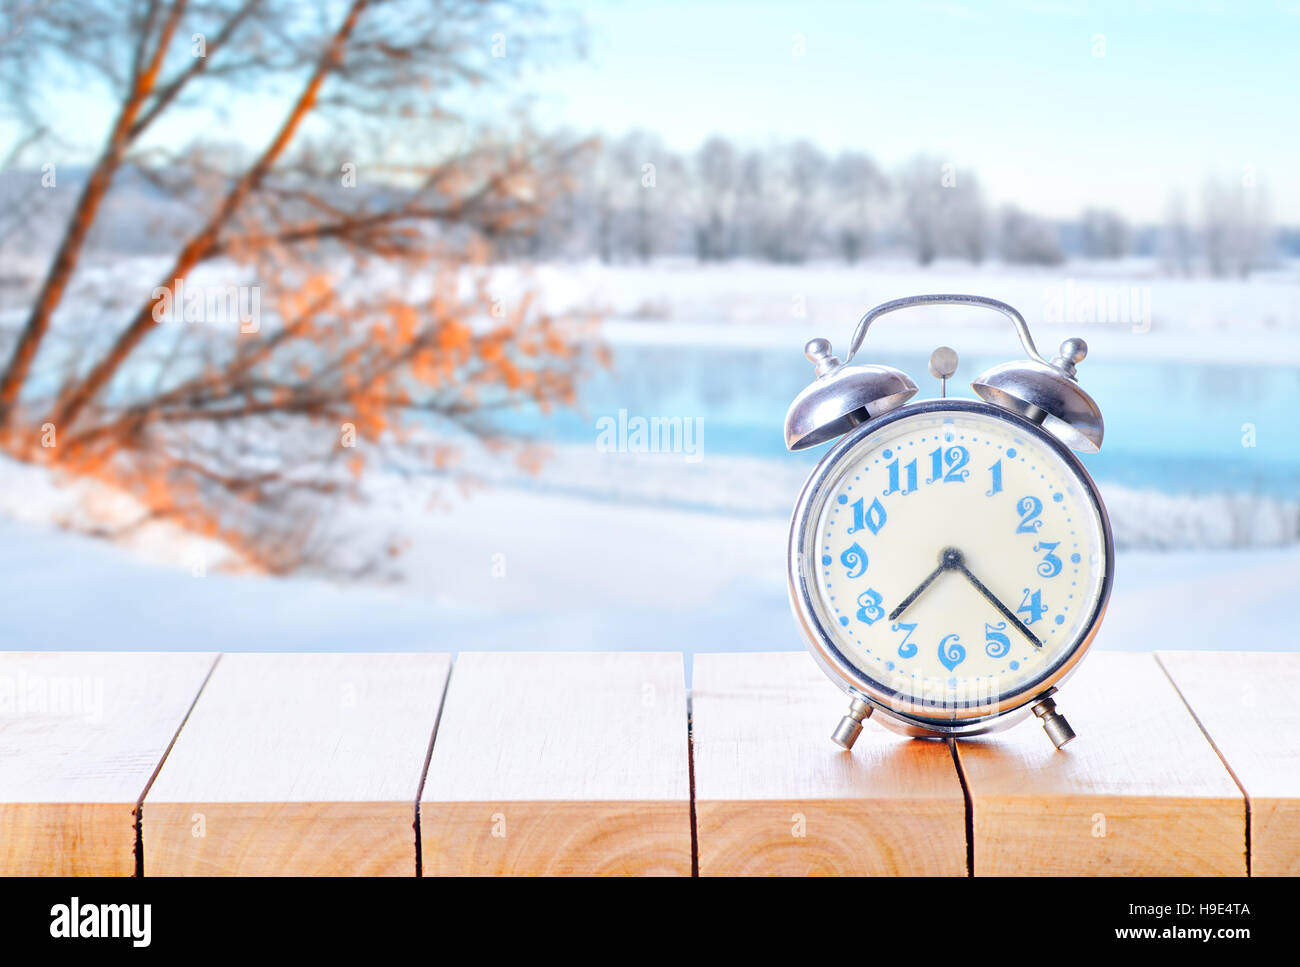 Daylight savings time, winter time, Stock Photo by ©NikD51 63370449